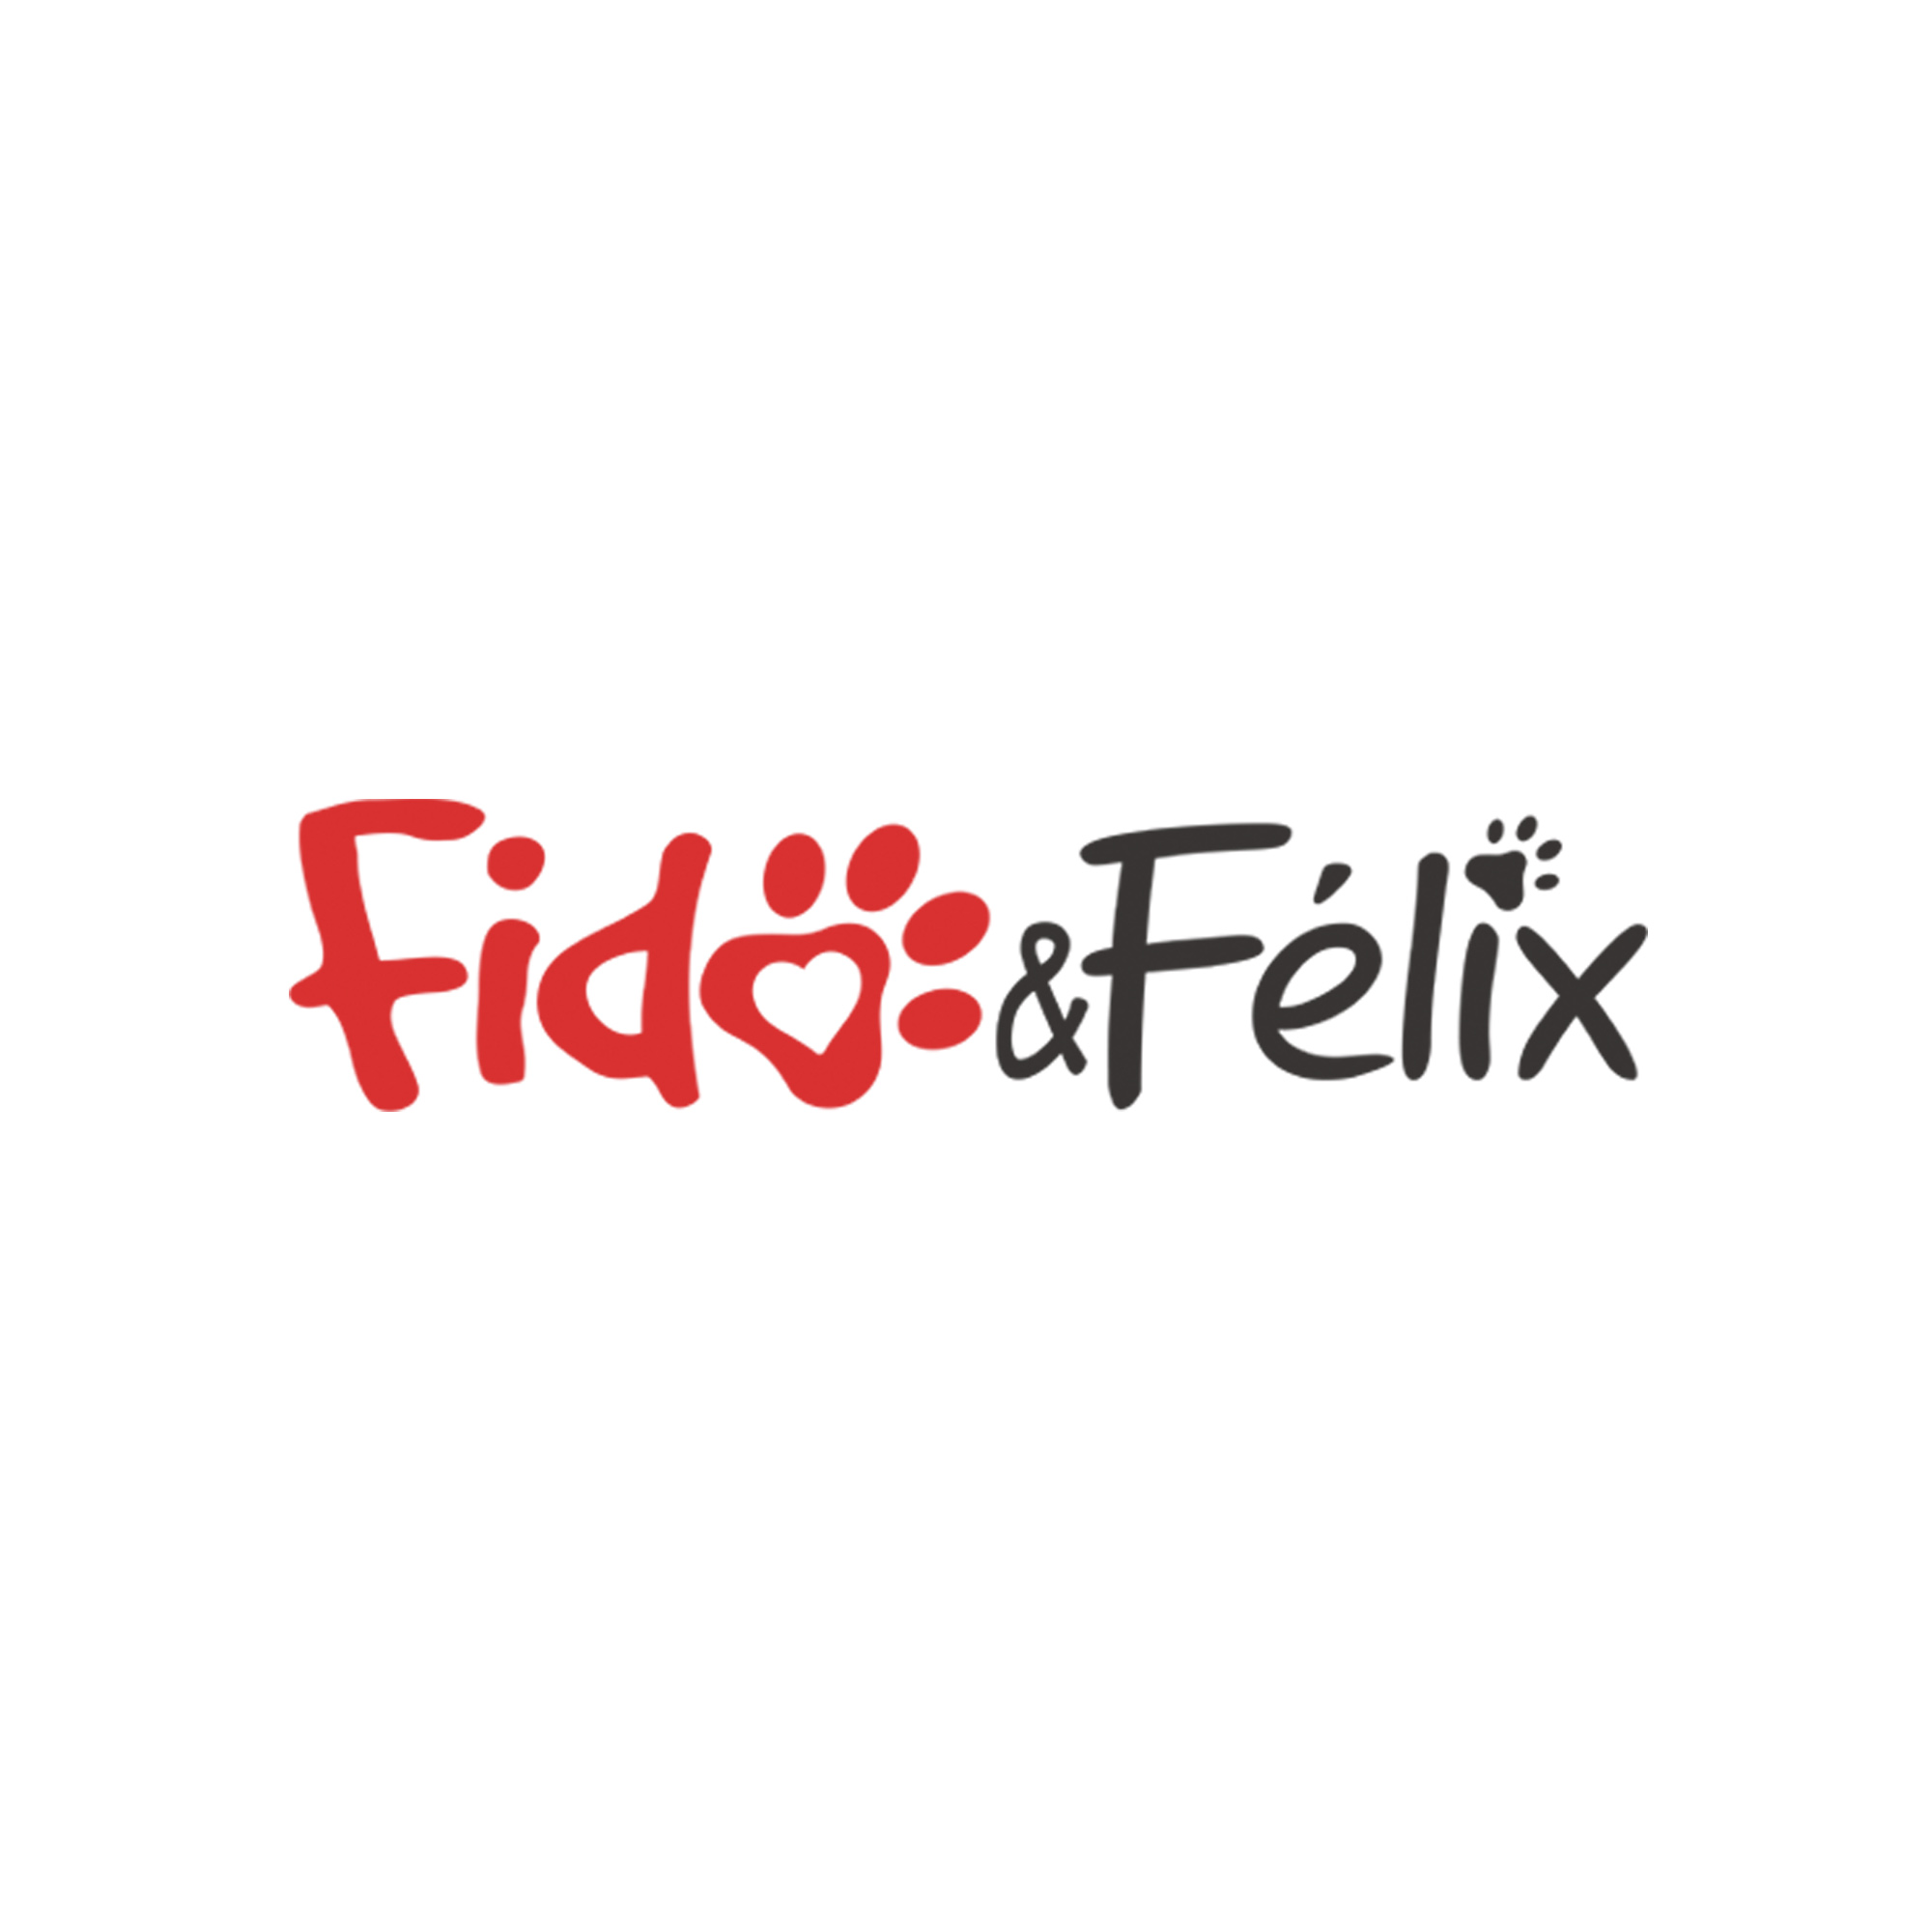 Fido et Felix